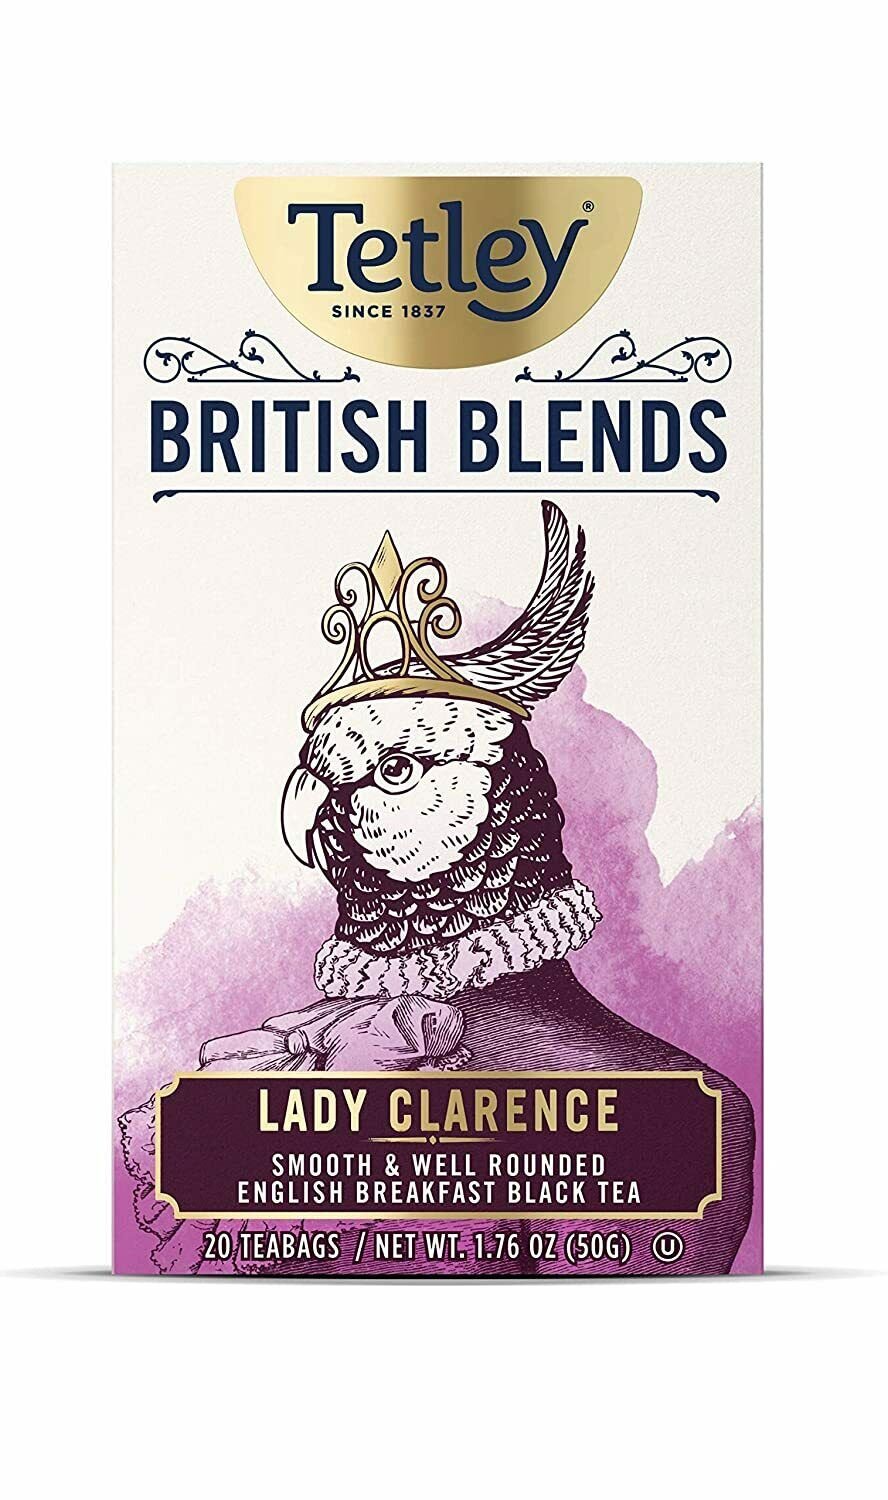 Tetley British Blends Lady Clarence English Breakfast Black Tea